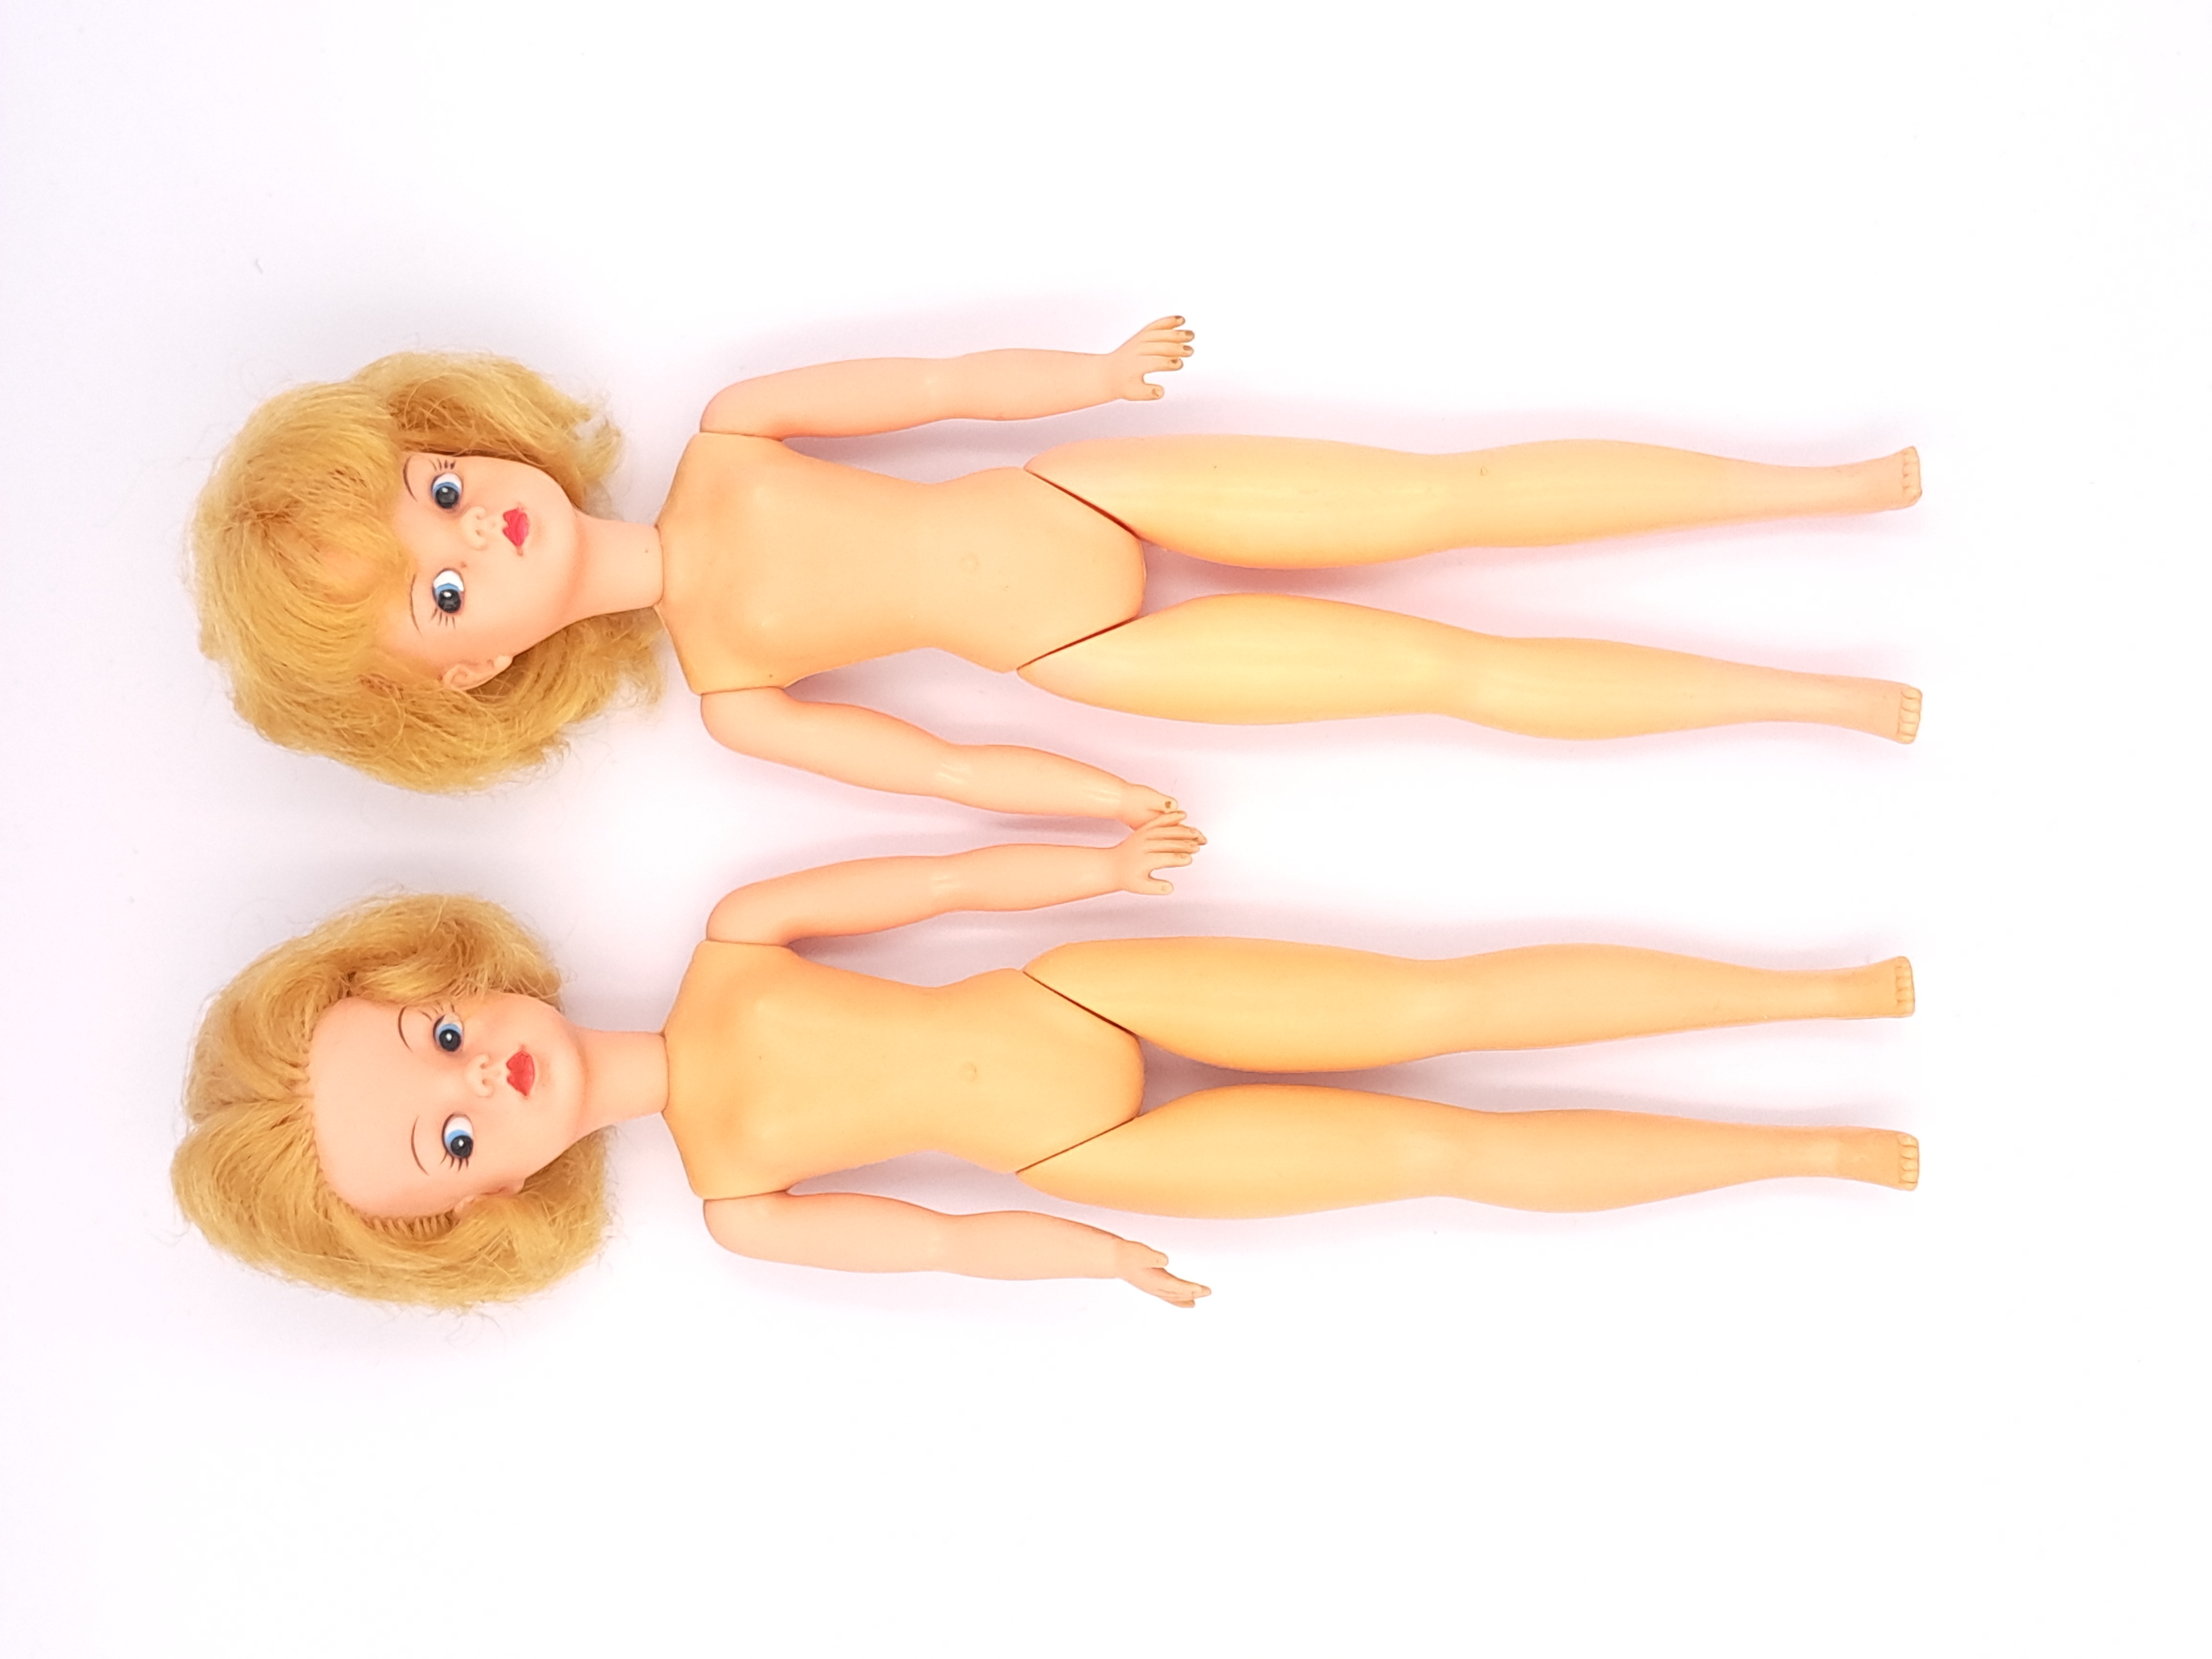 Pedigree Sindy pair of vintage dolls, blonde, 1963 - Image 3 of 4